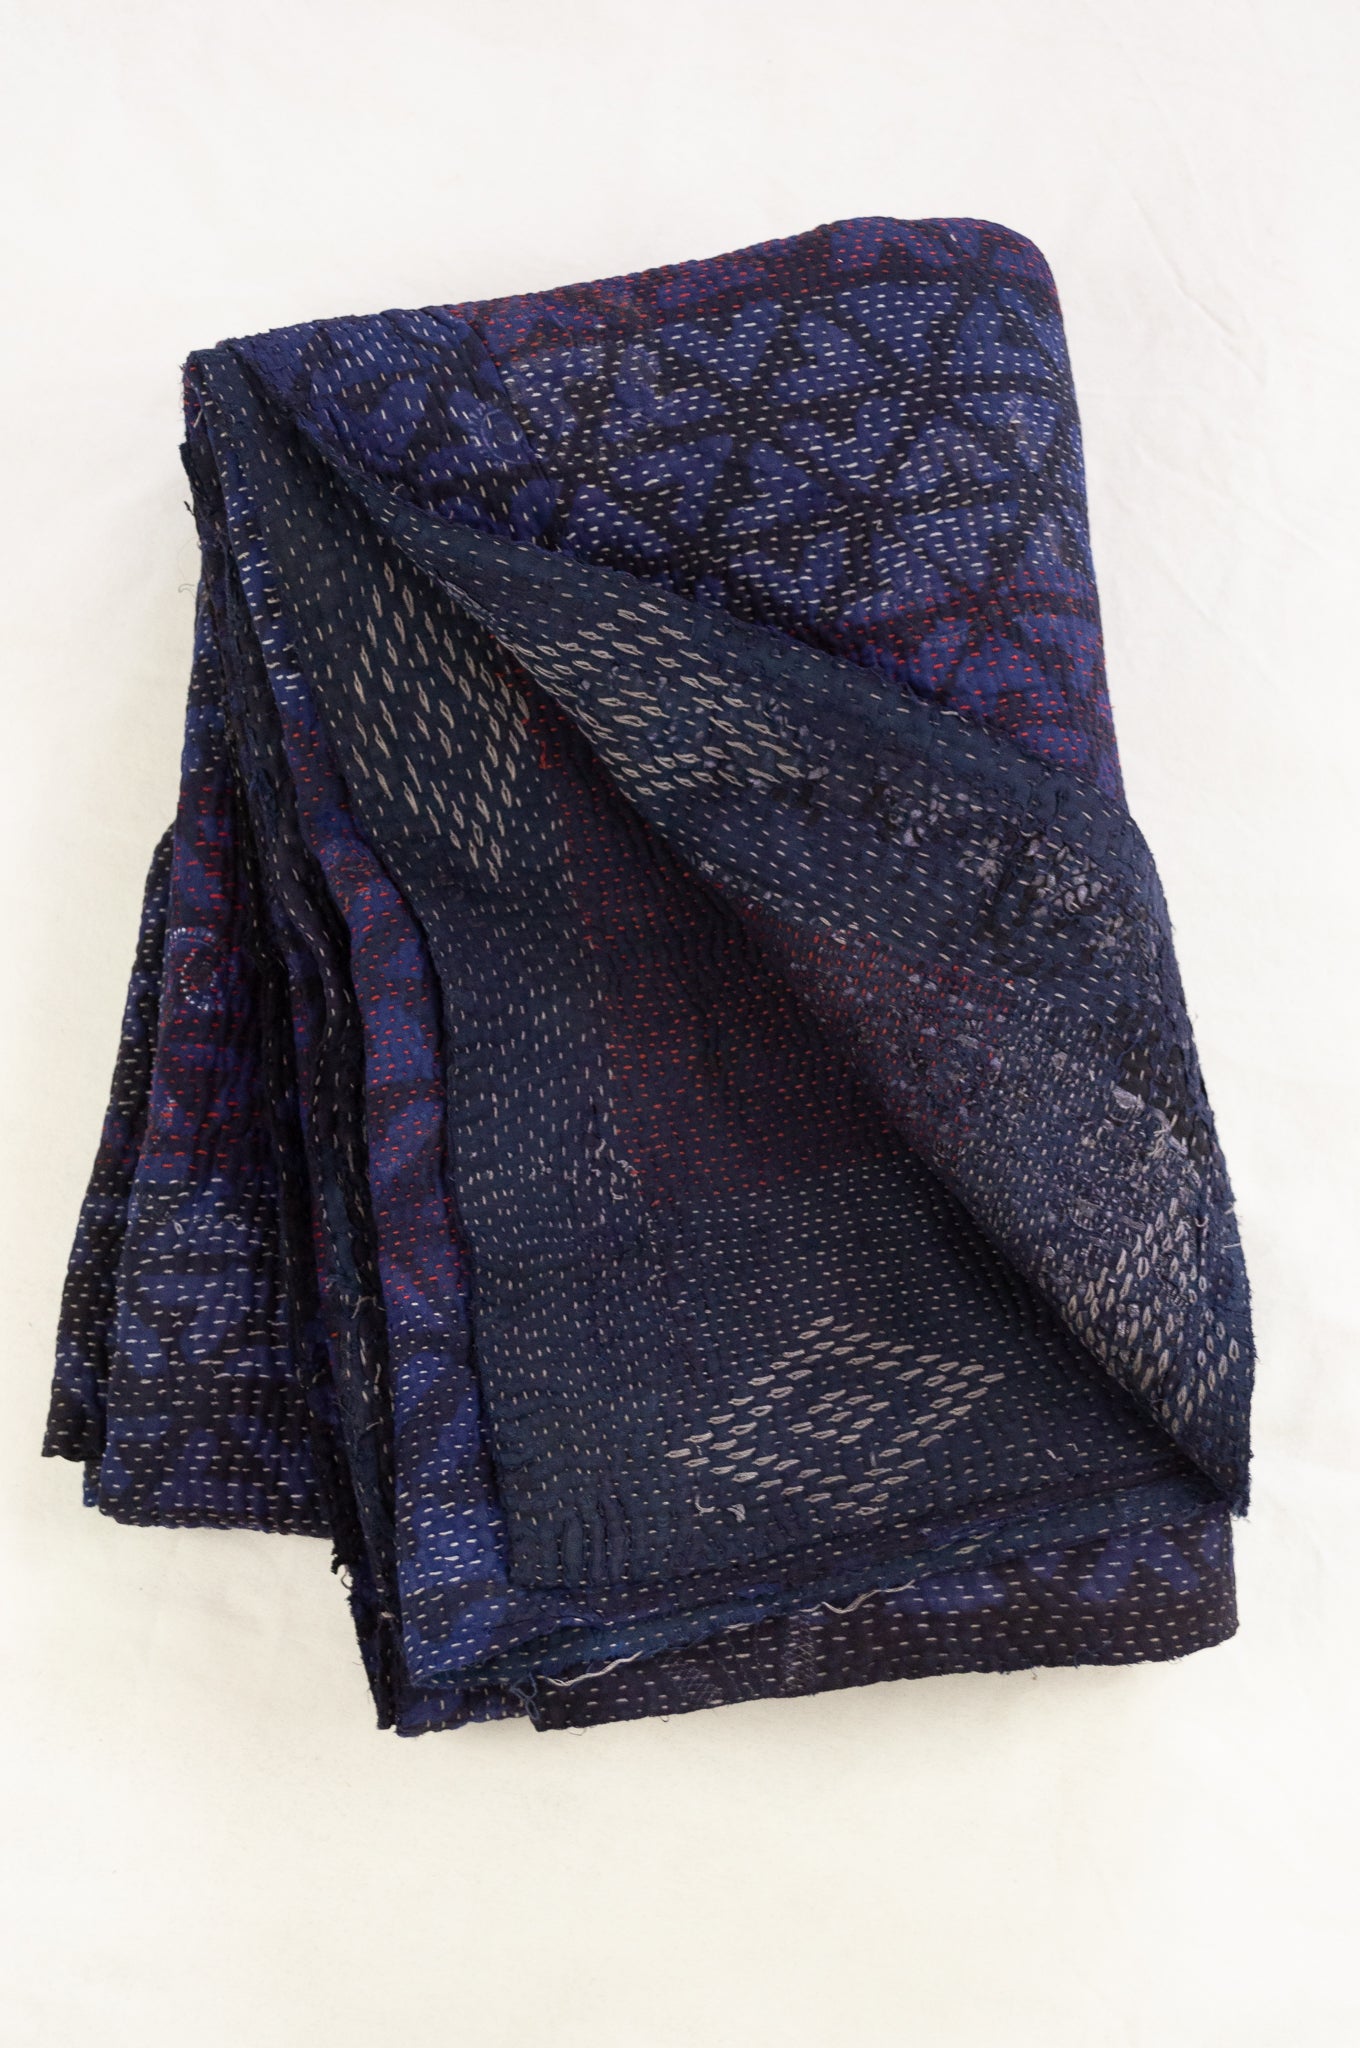 VIntage kantha quilt, overdyed in natural indigo using mud resist blockprint, inverted arrow pattern.